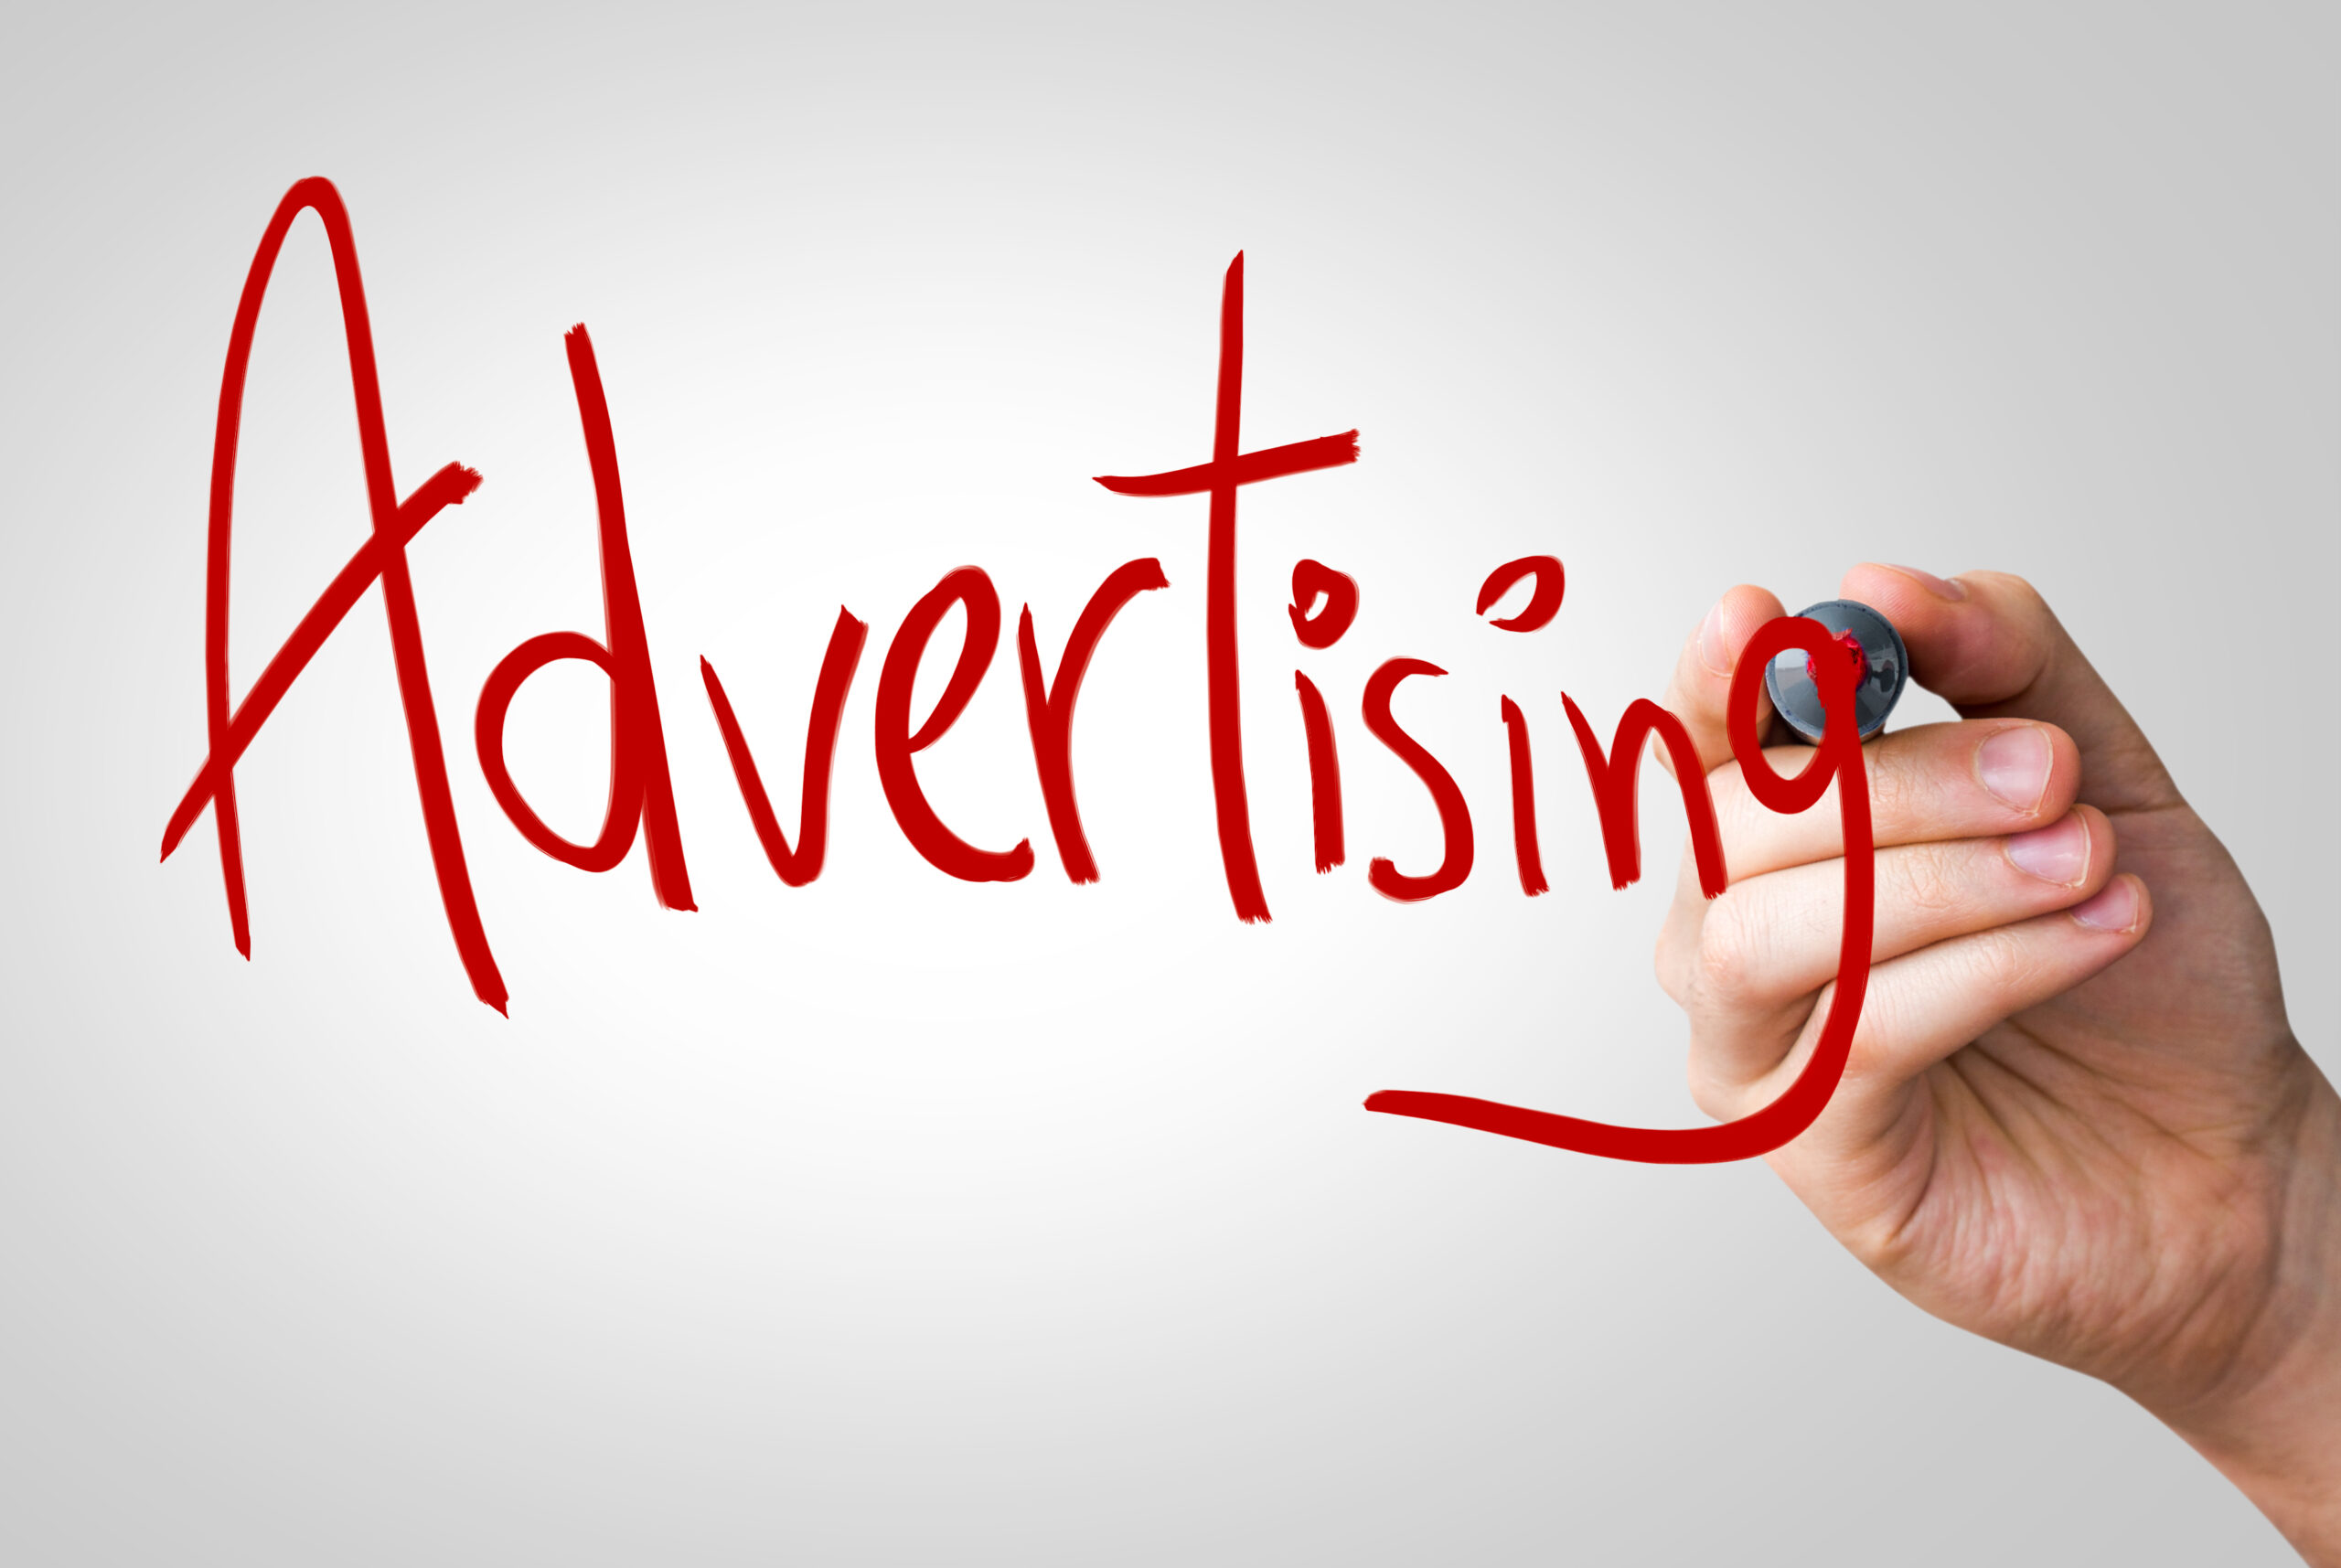 Digital Advertising Company